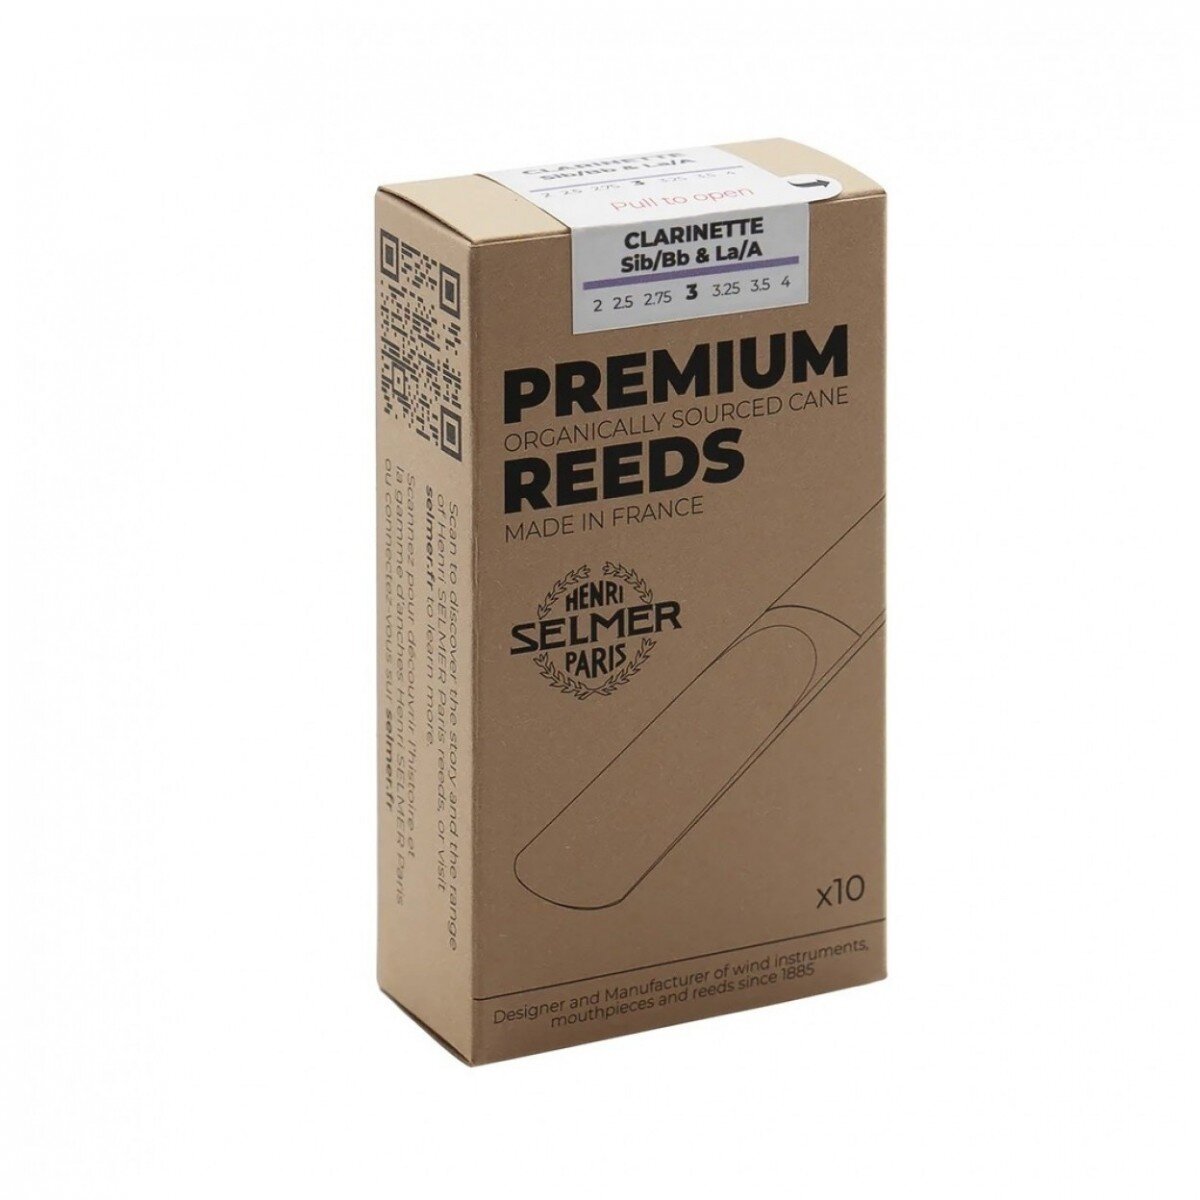 Selmer Clarinette Premium 4 : photo 1